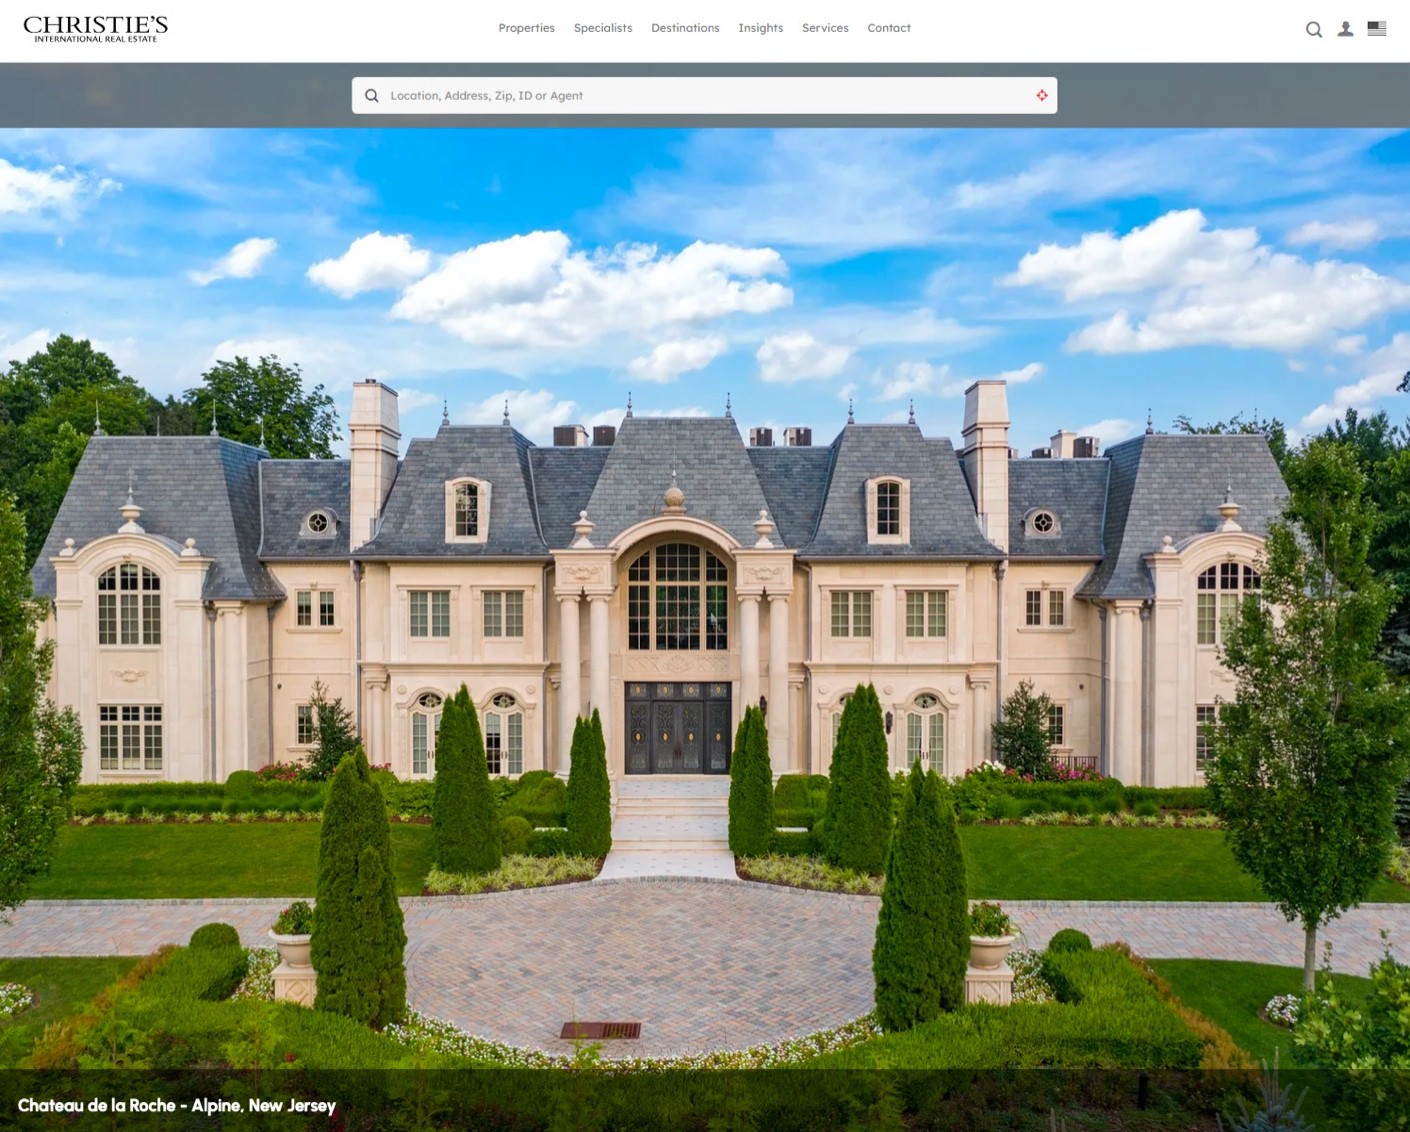 Christie's Real Estate Brokerage Website